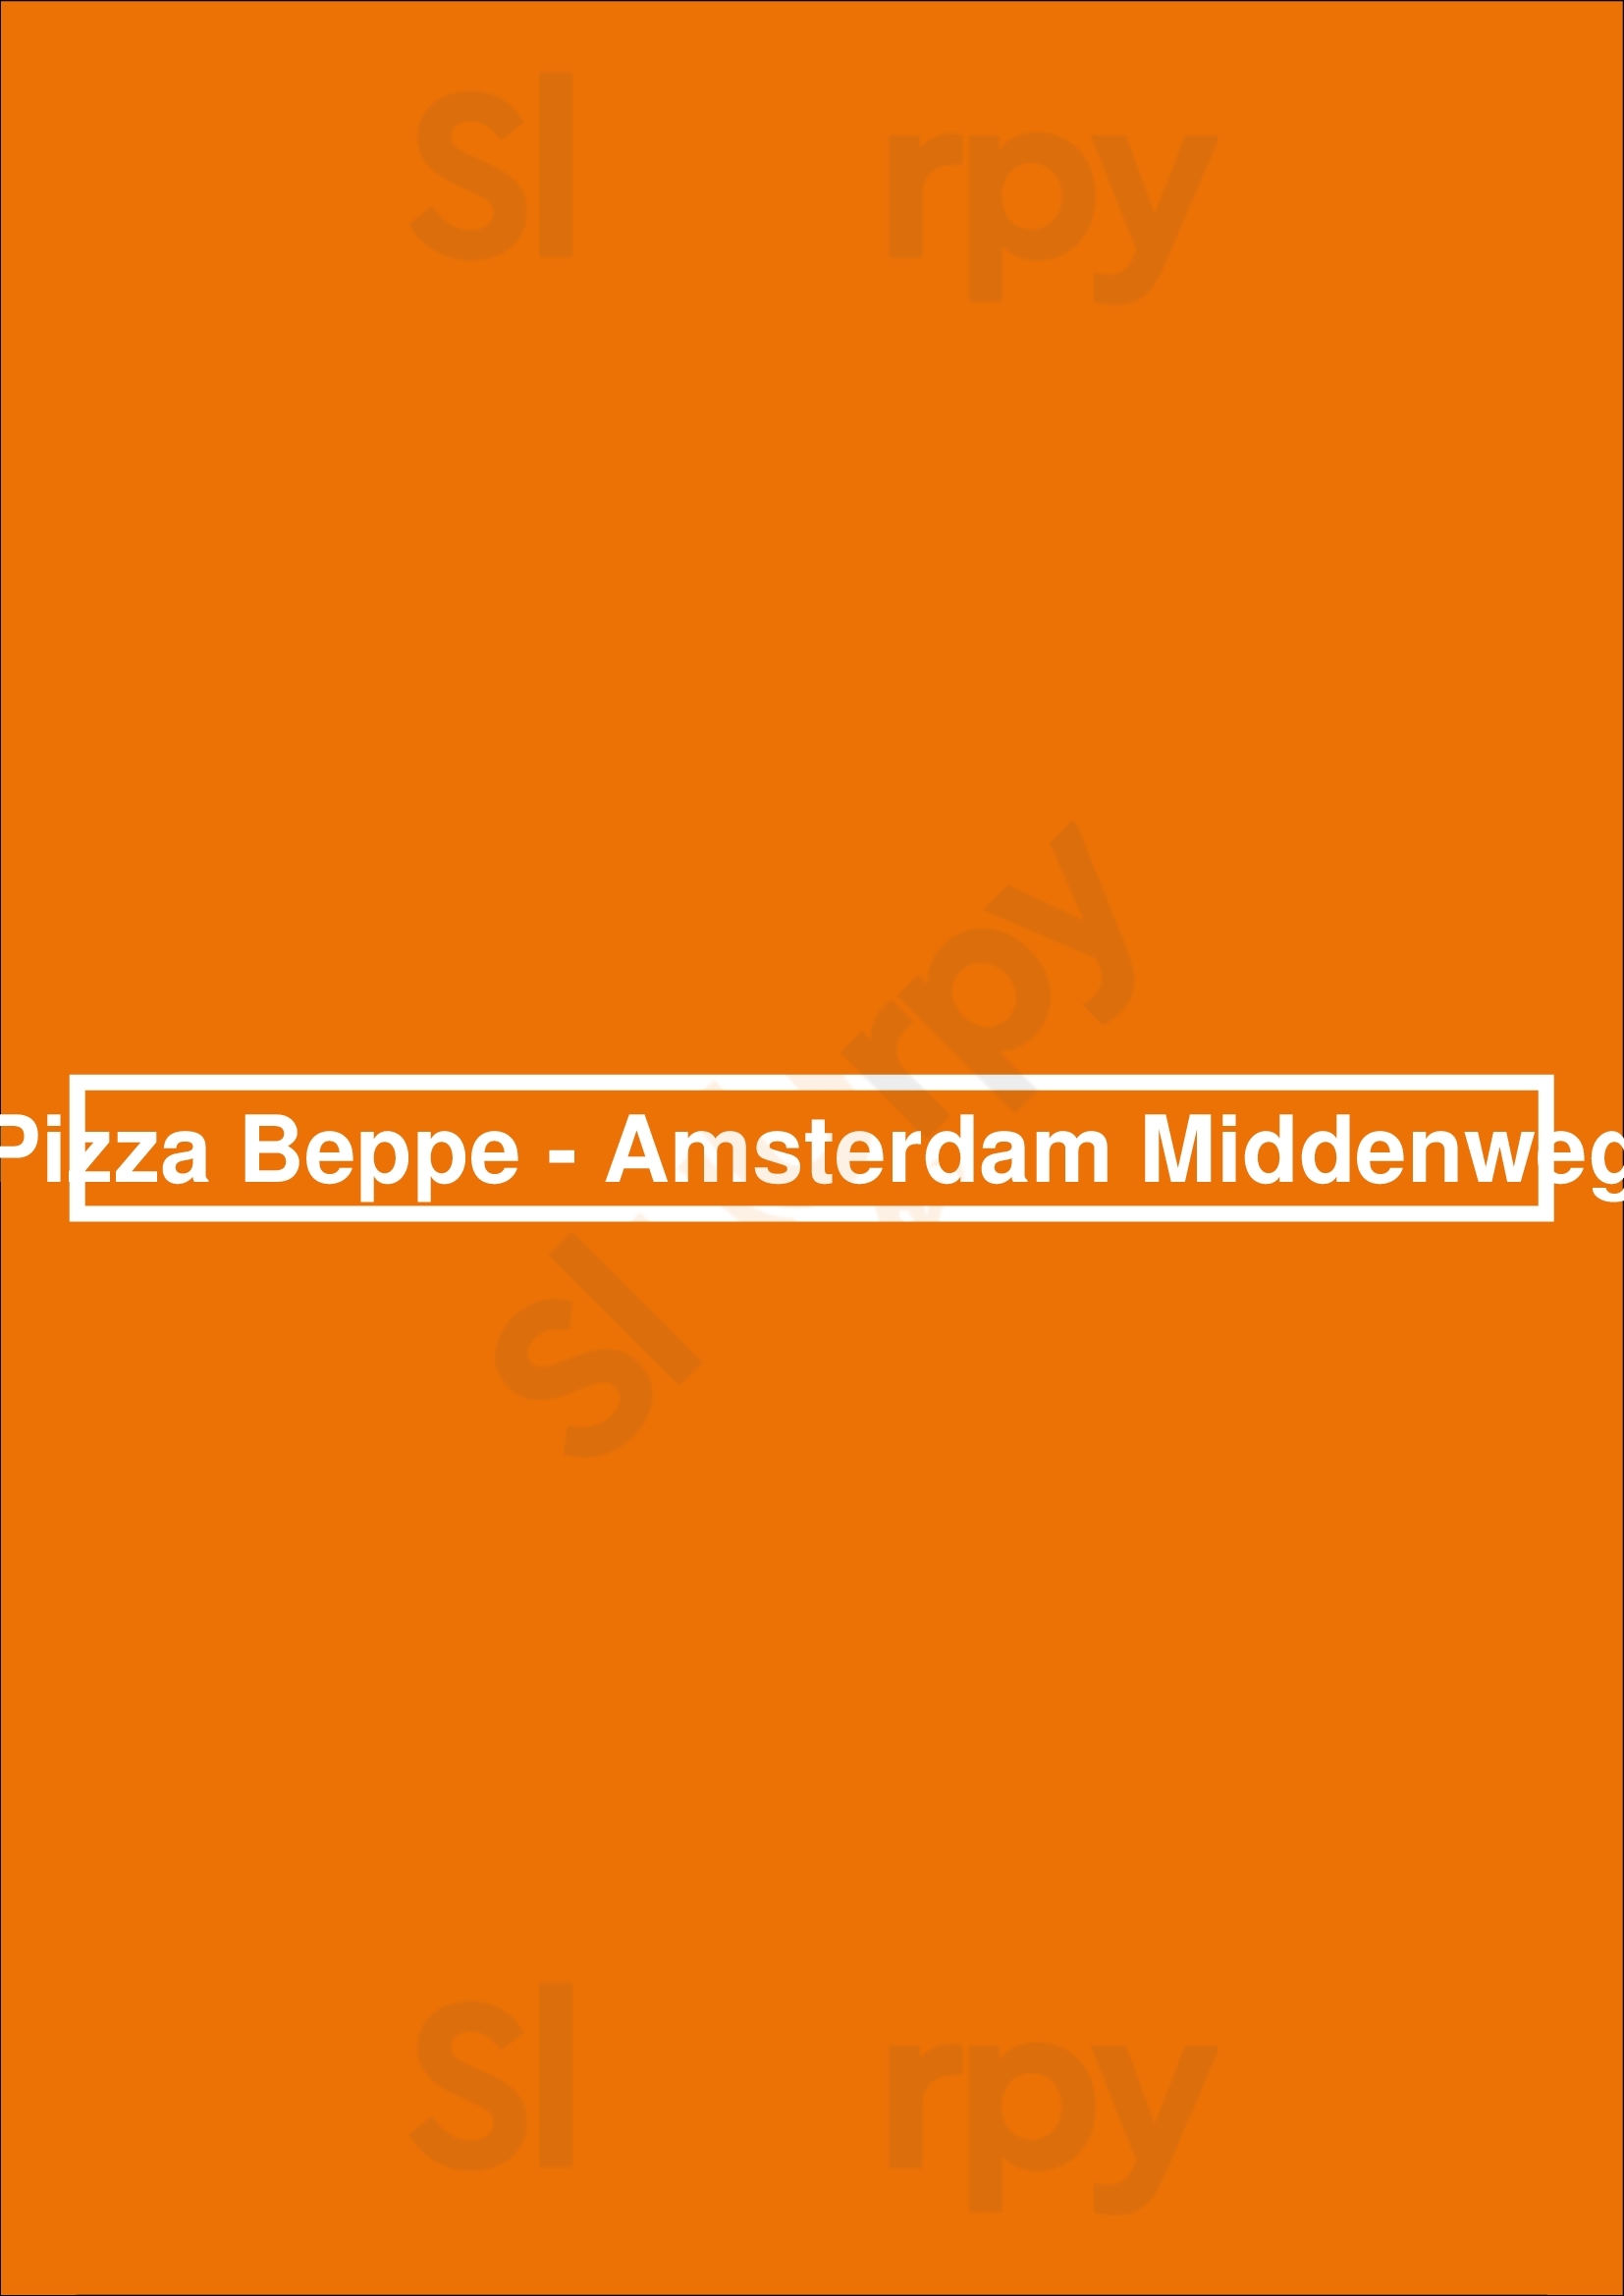 Pizza Beppe - Amsterdam Middenweg Amsterdam Menu - 1